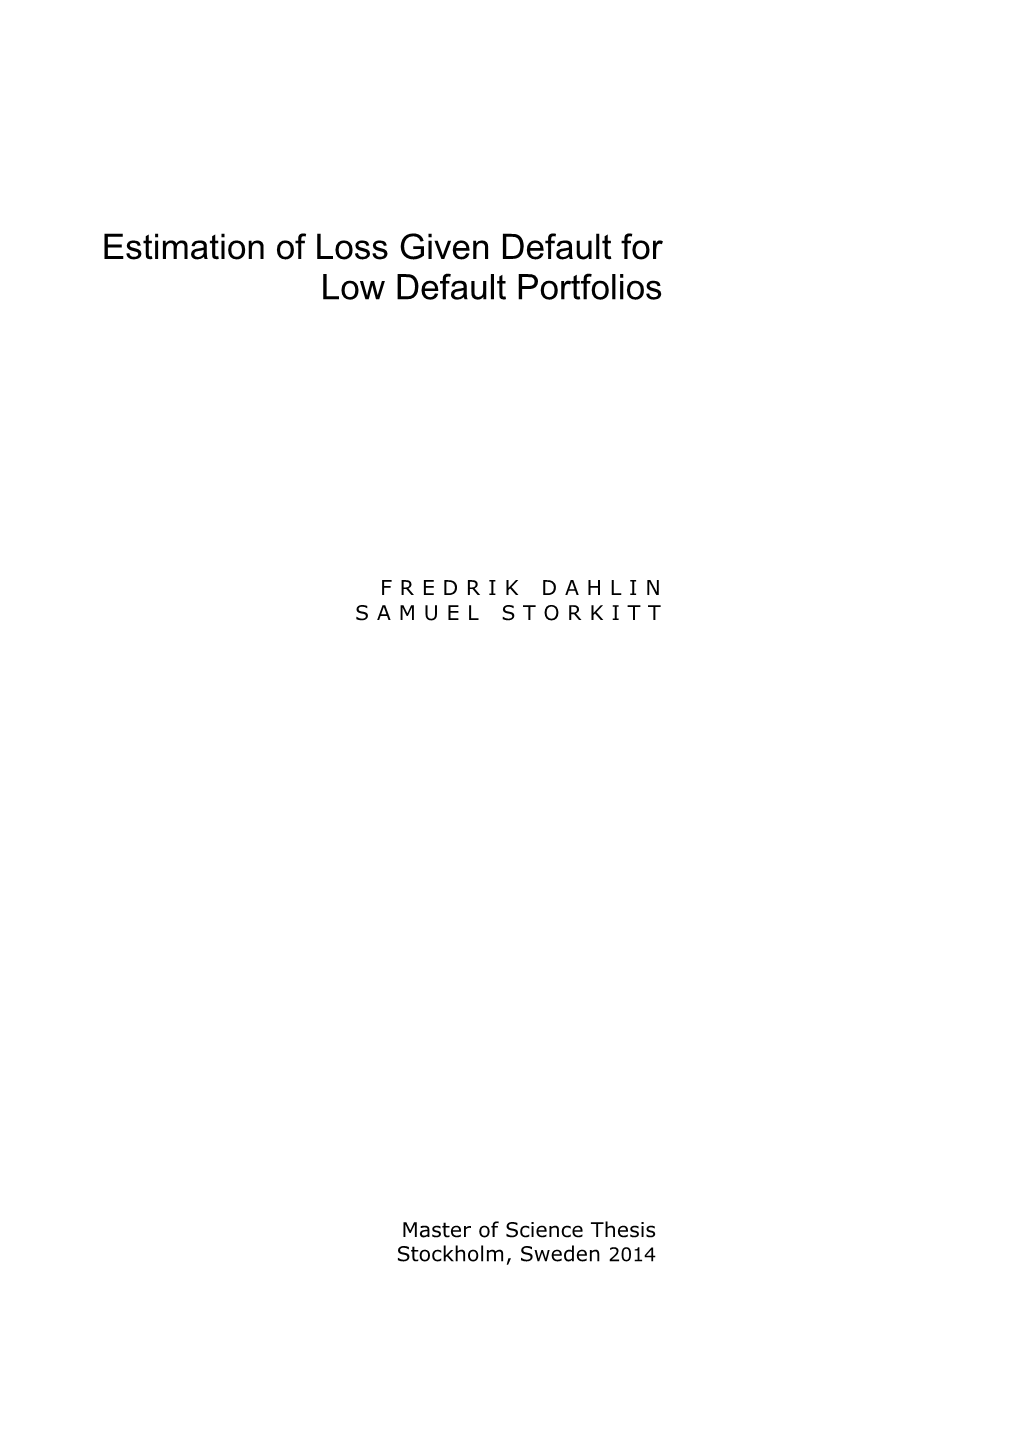 Estimation of Loss Given Default for Low Default Portfolios